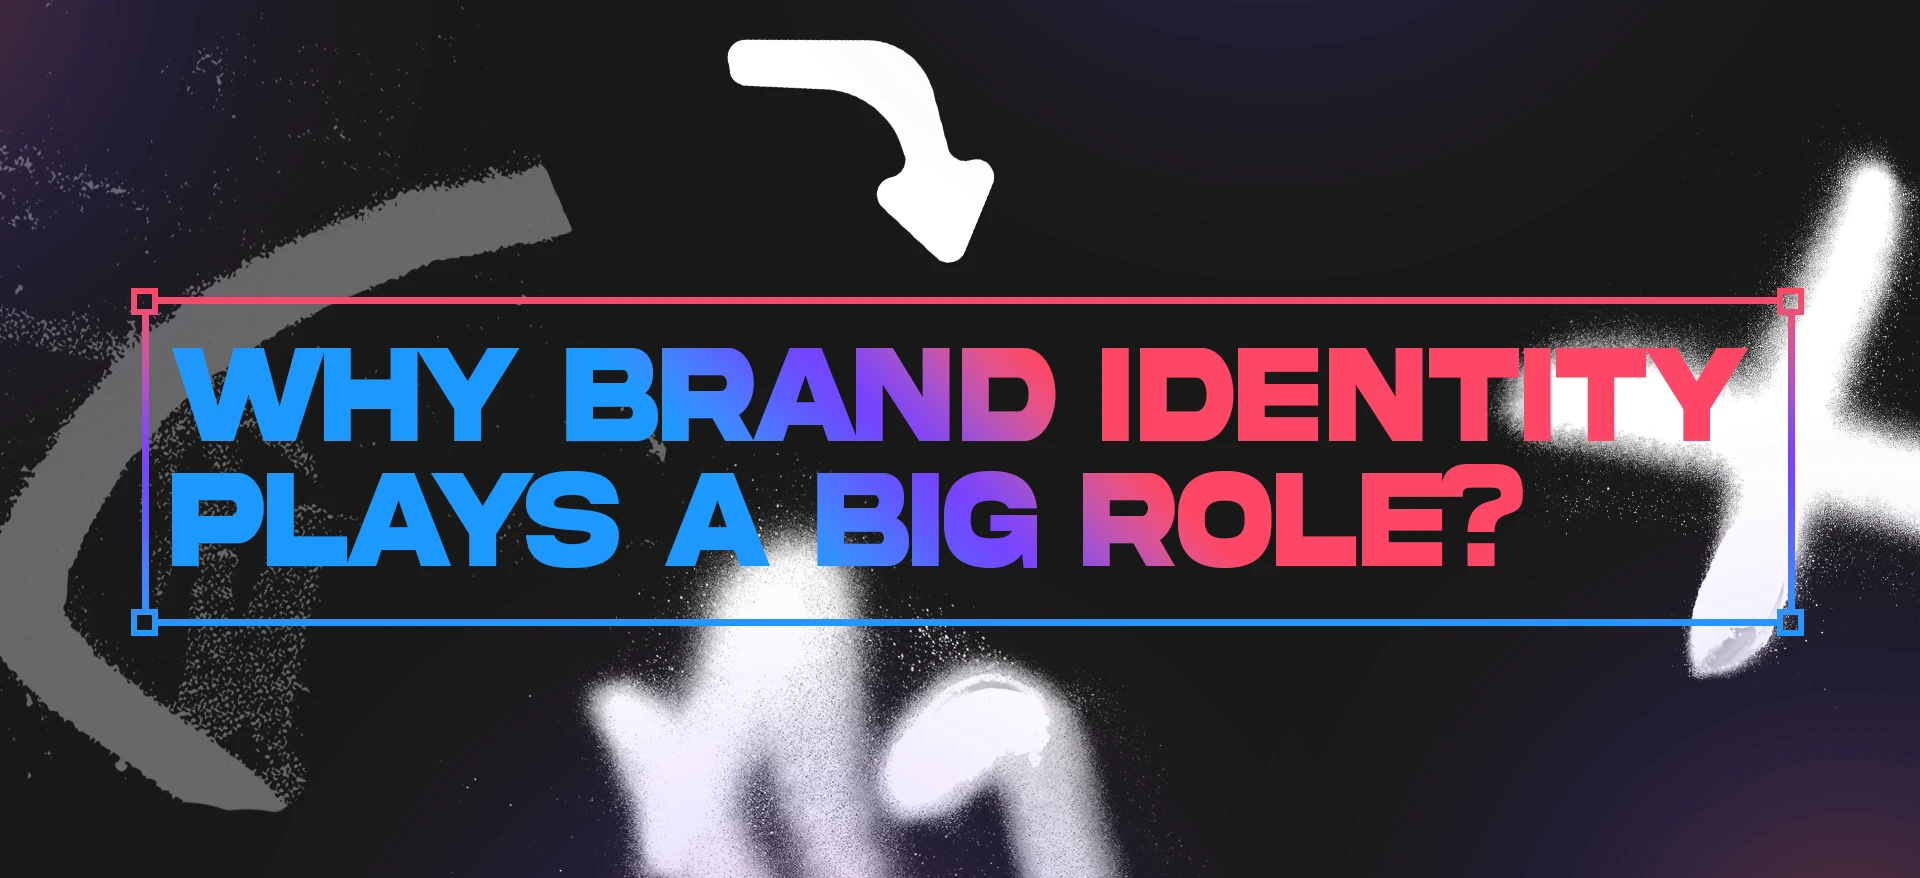 Why brand Identity plays a big role?